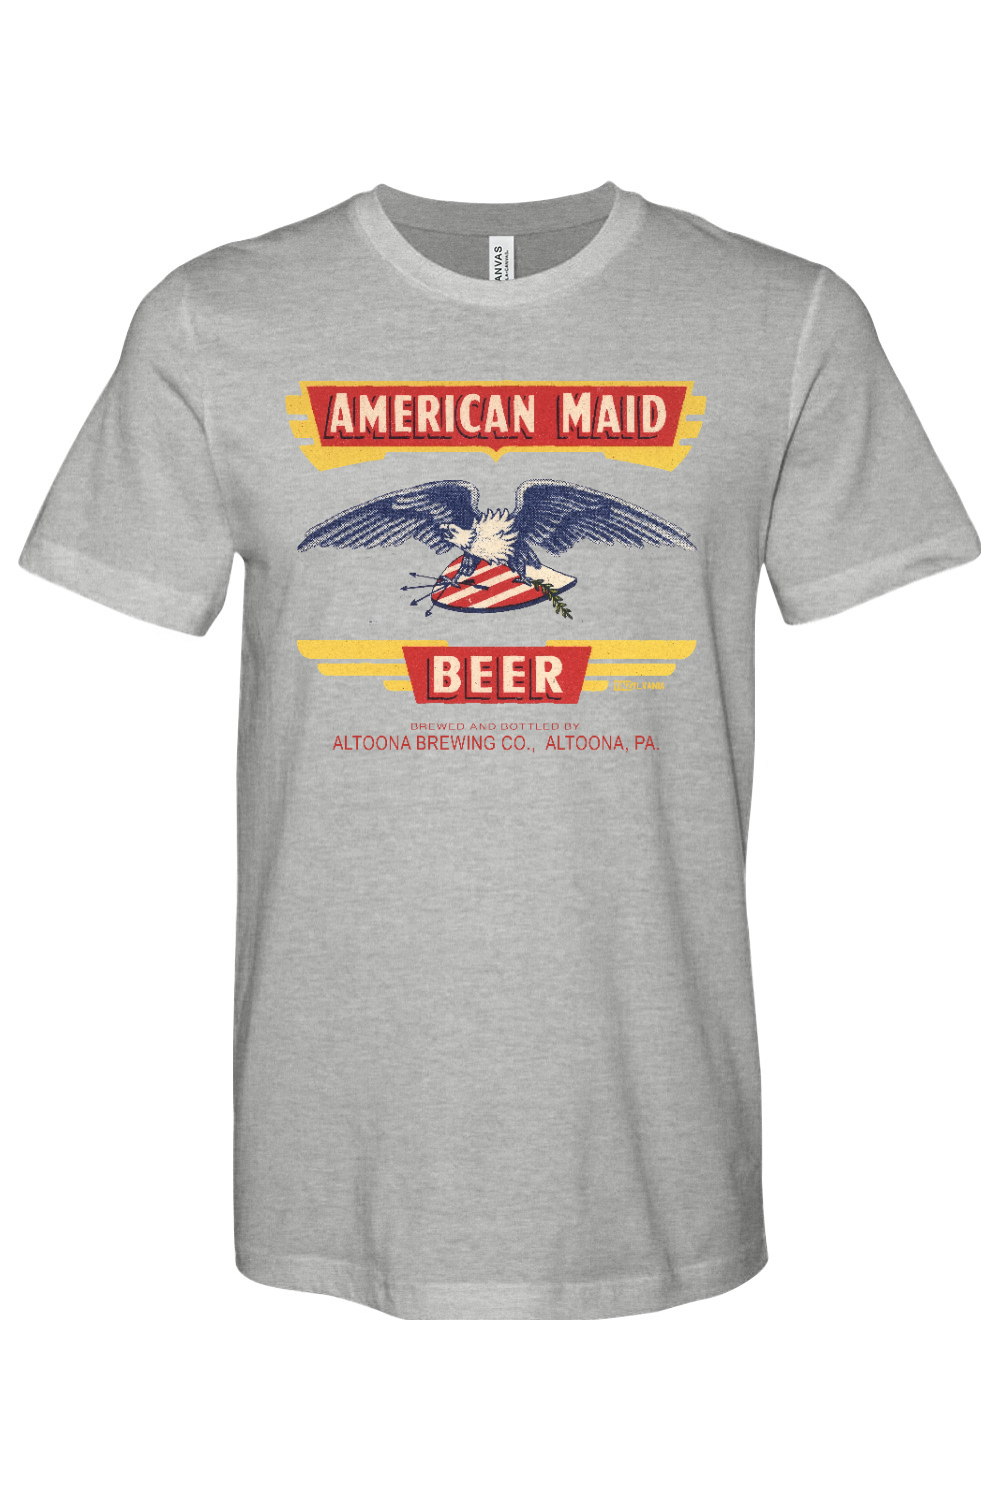 American Maid Beer - Altoona, PA - Yinzylvania